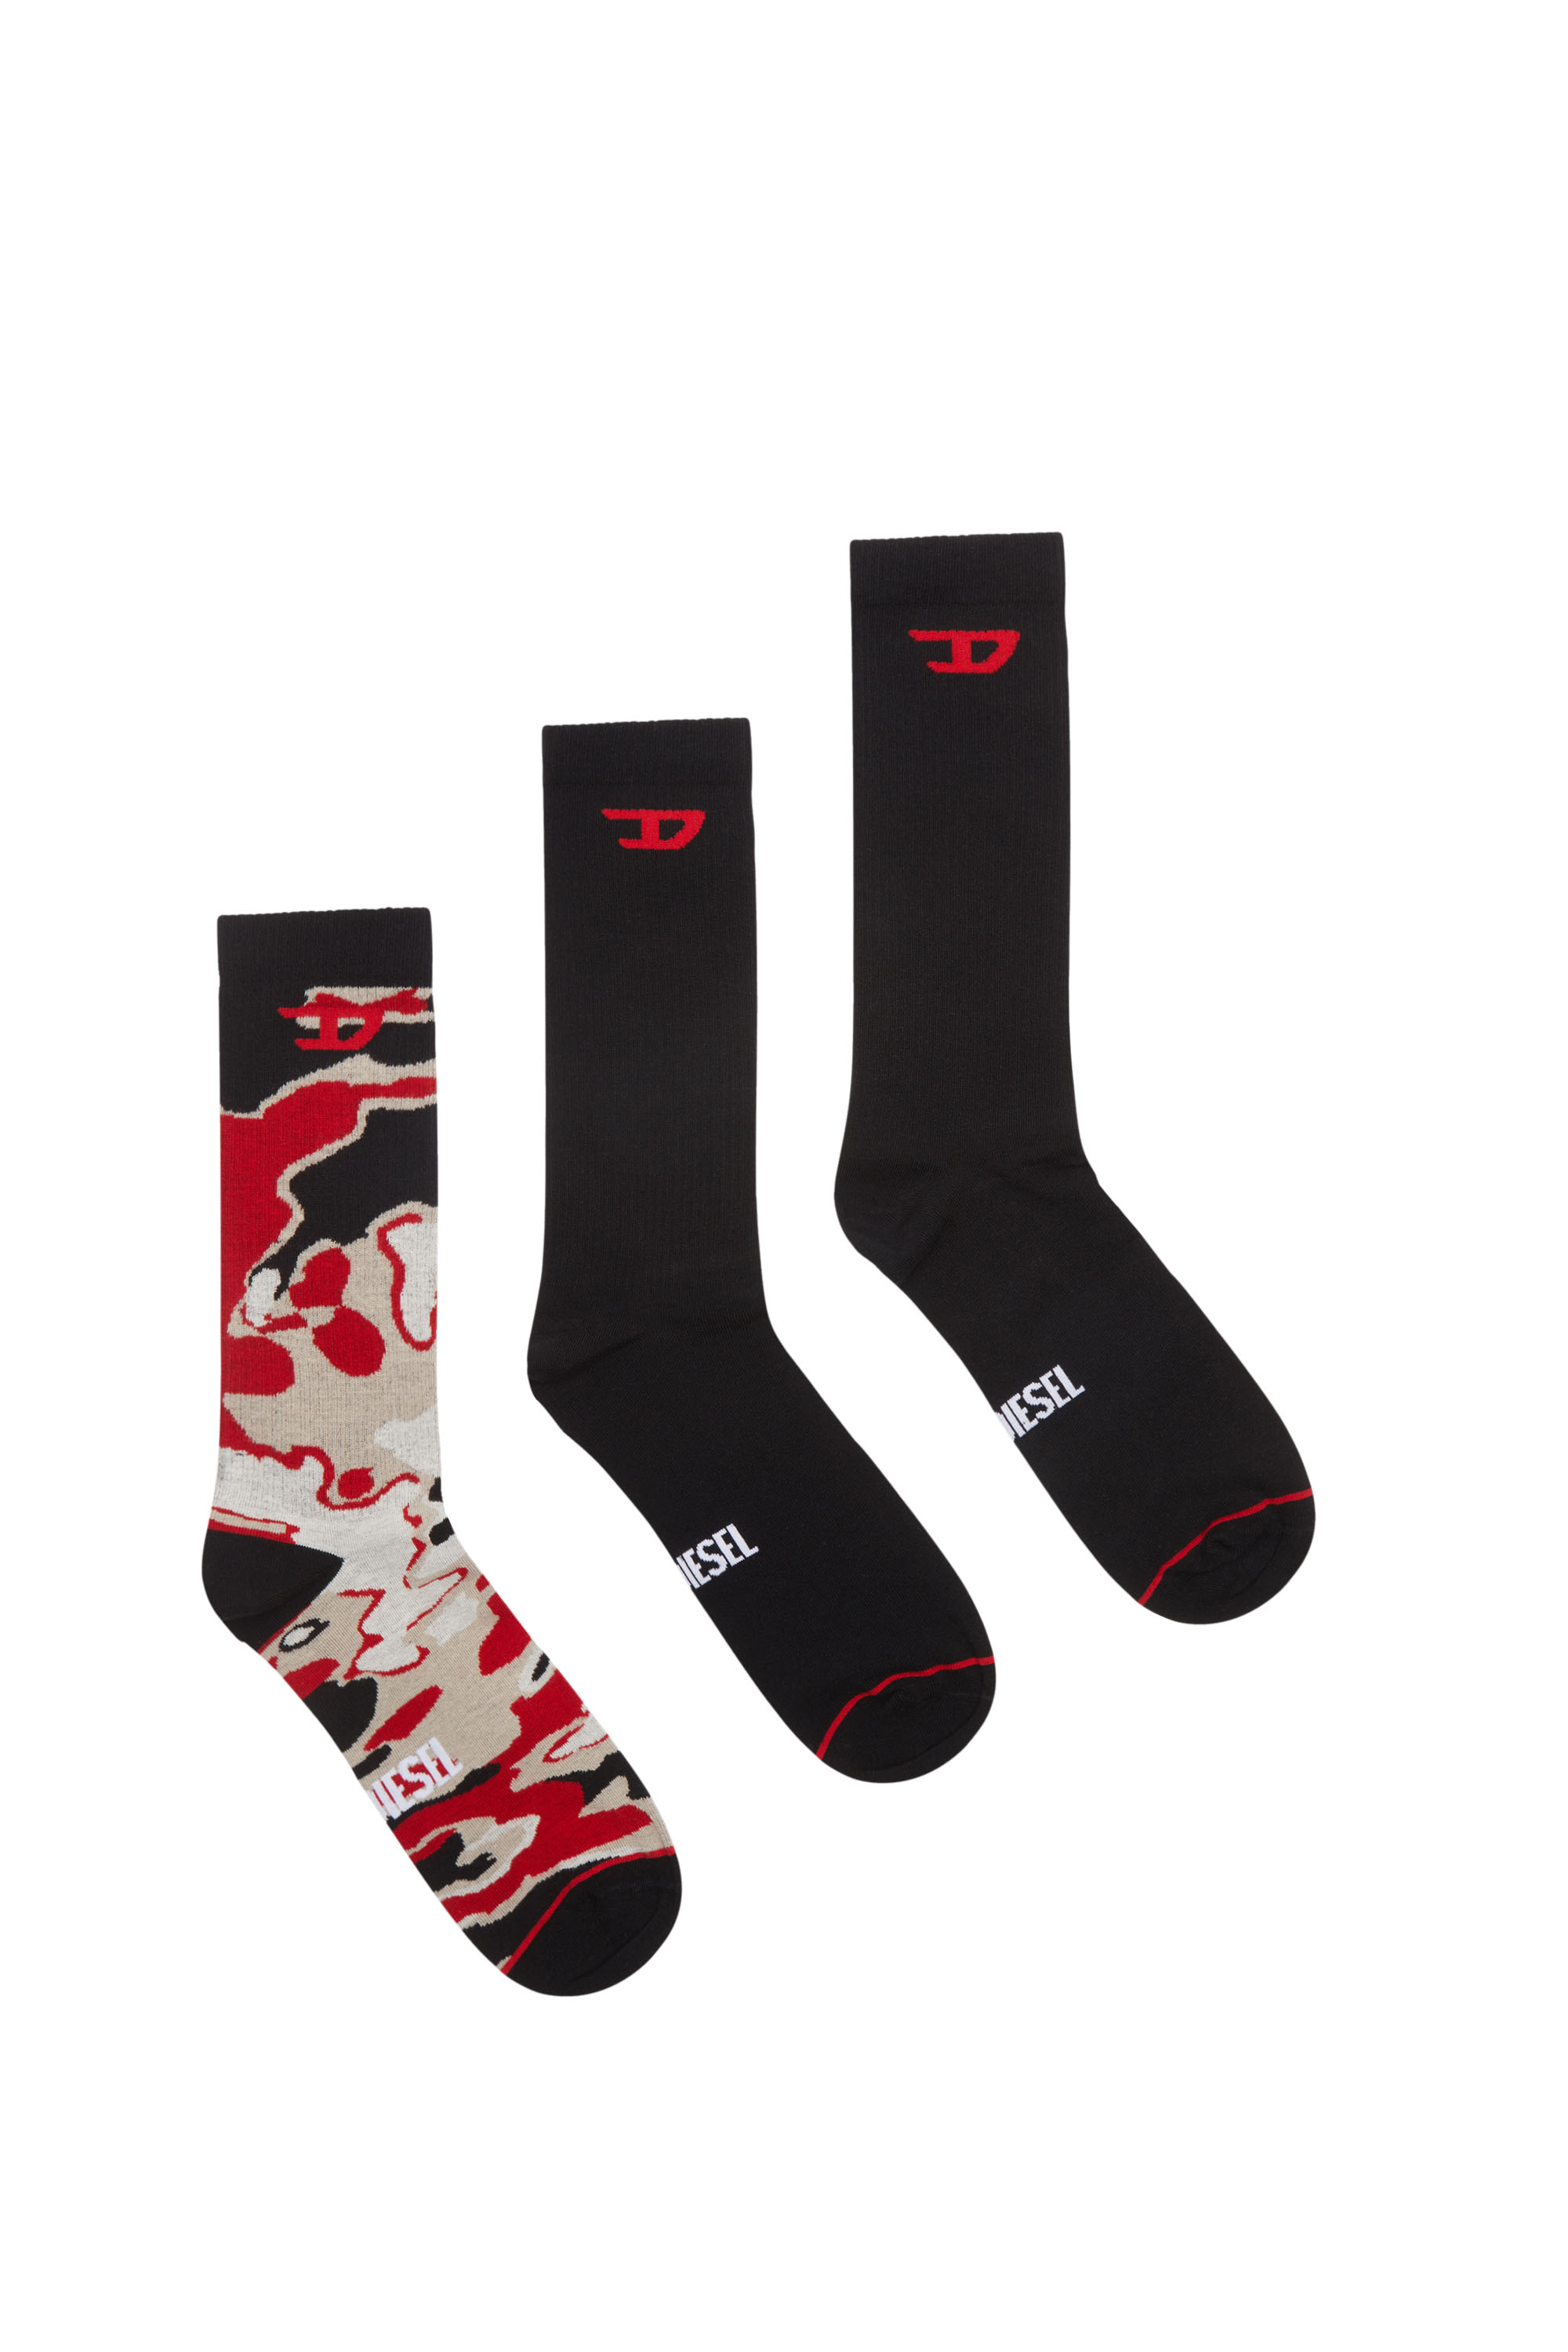 SKM-RAY-THREEPACK, Black/Red - Socks